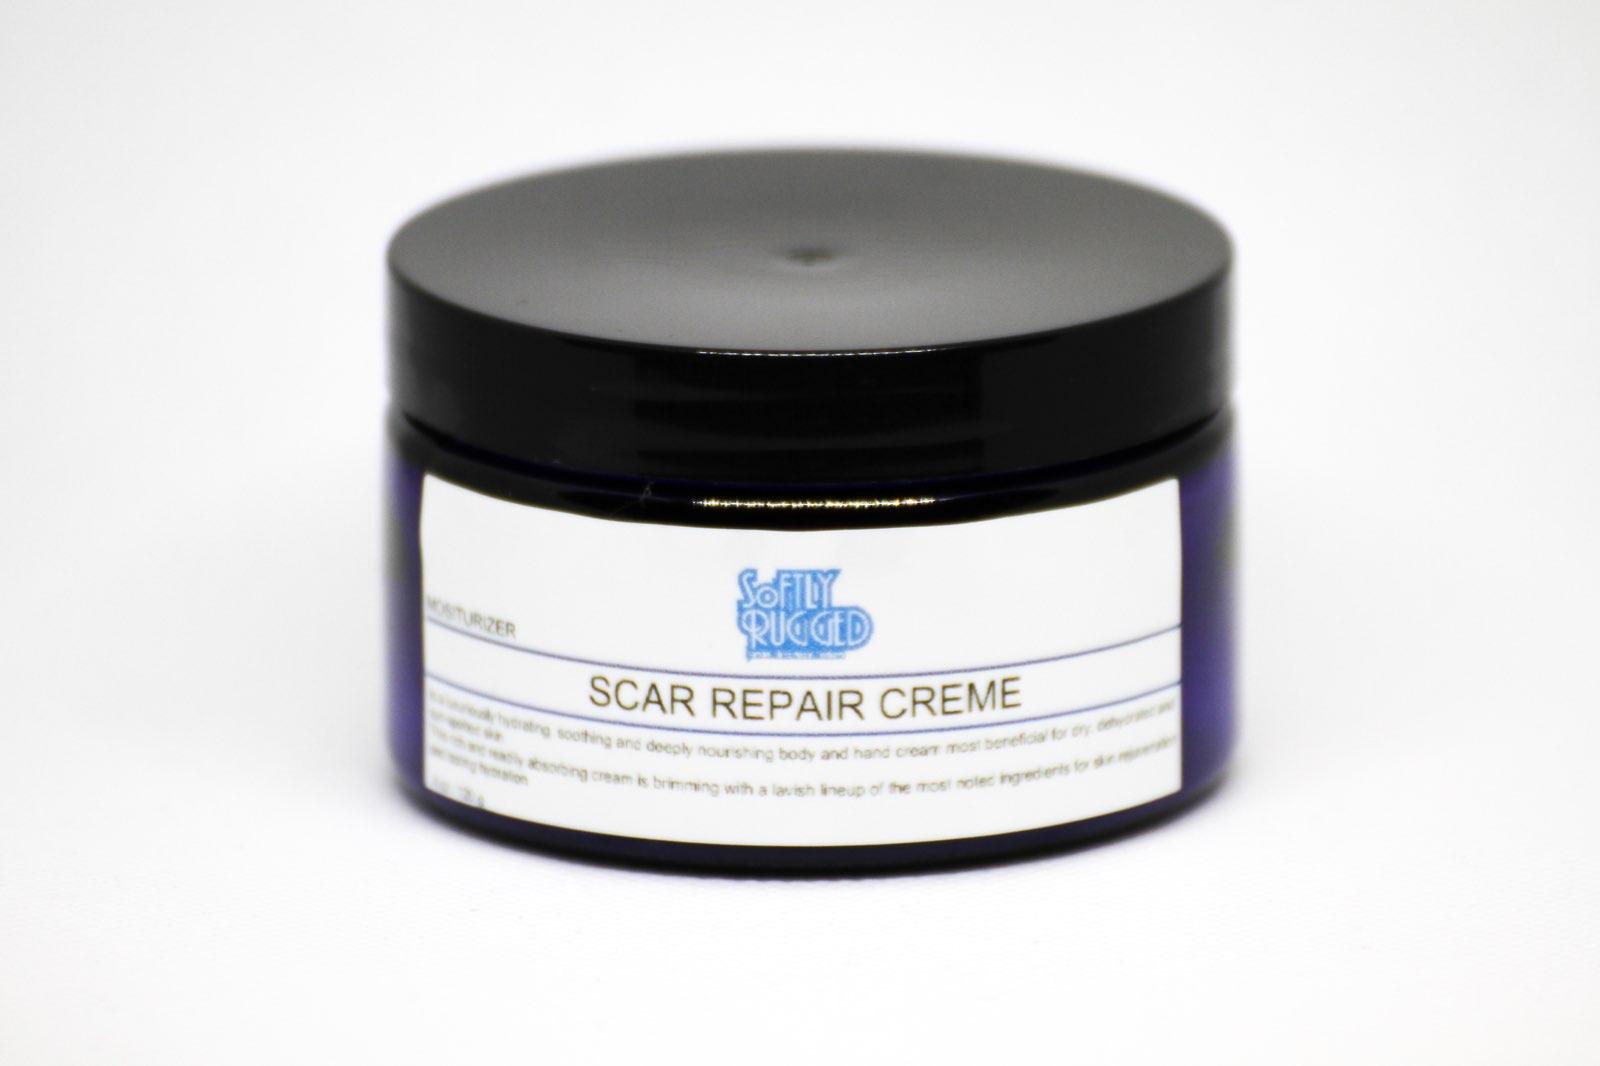 Scar Repair Creme - Softly Rugged